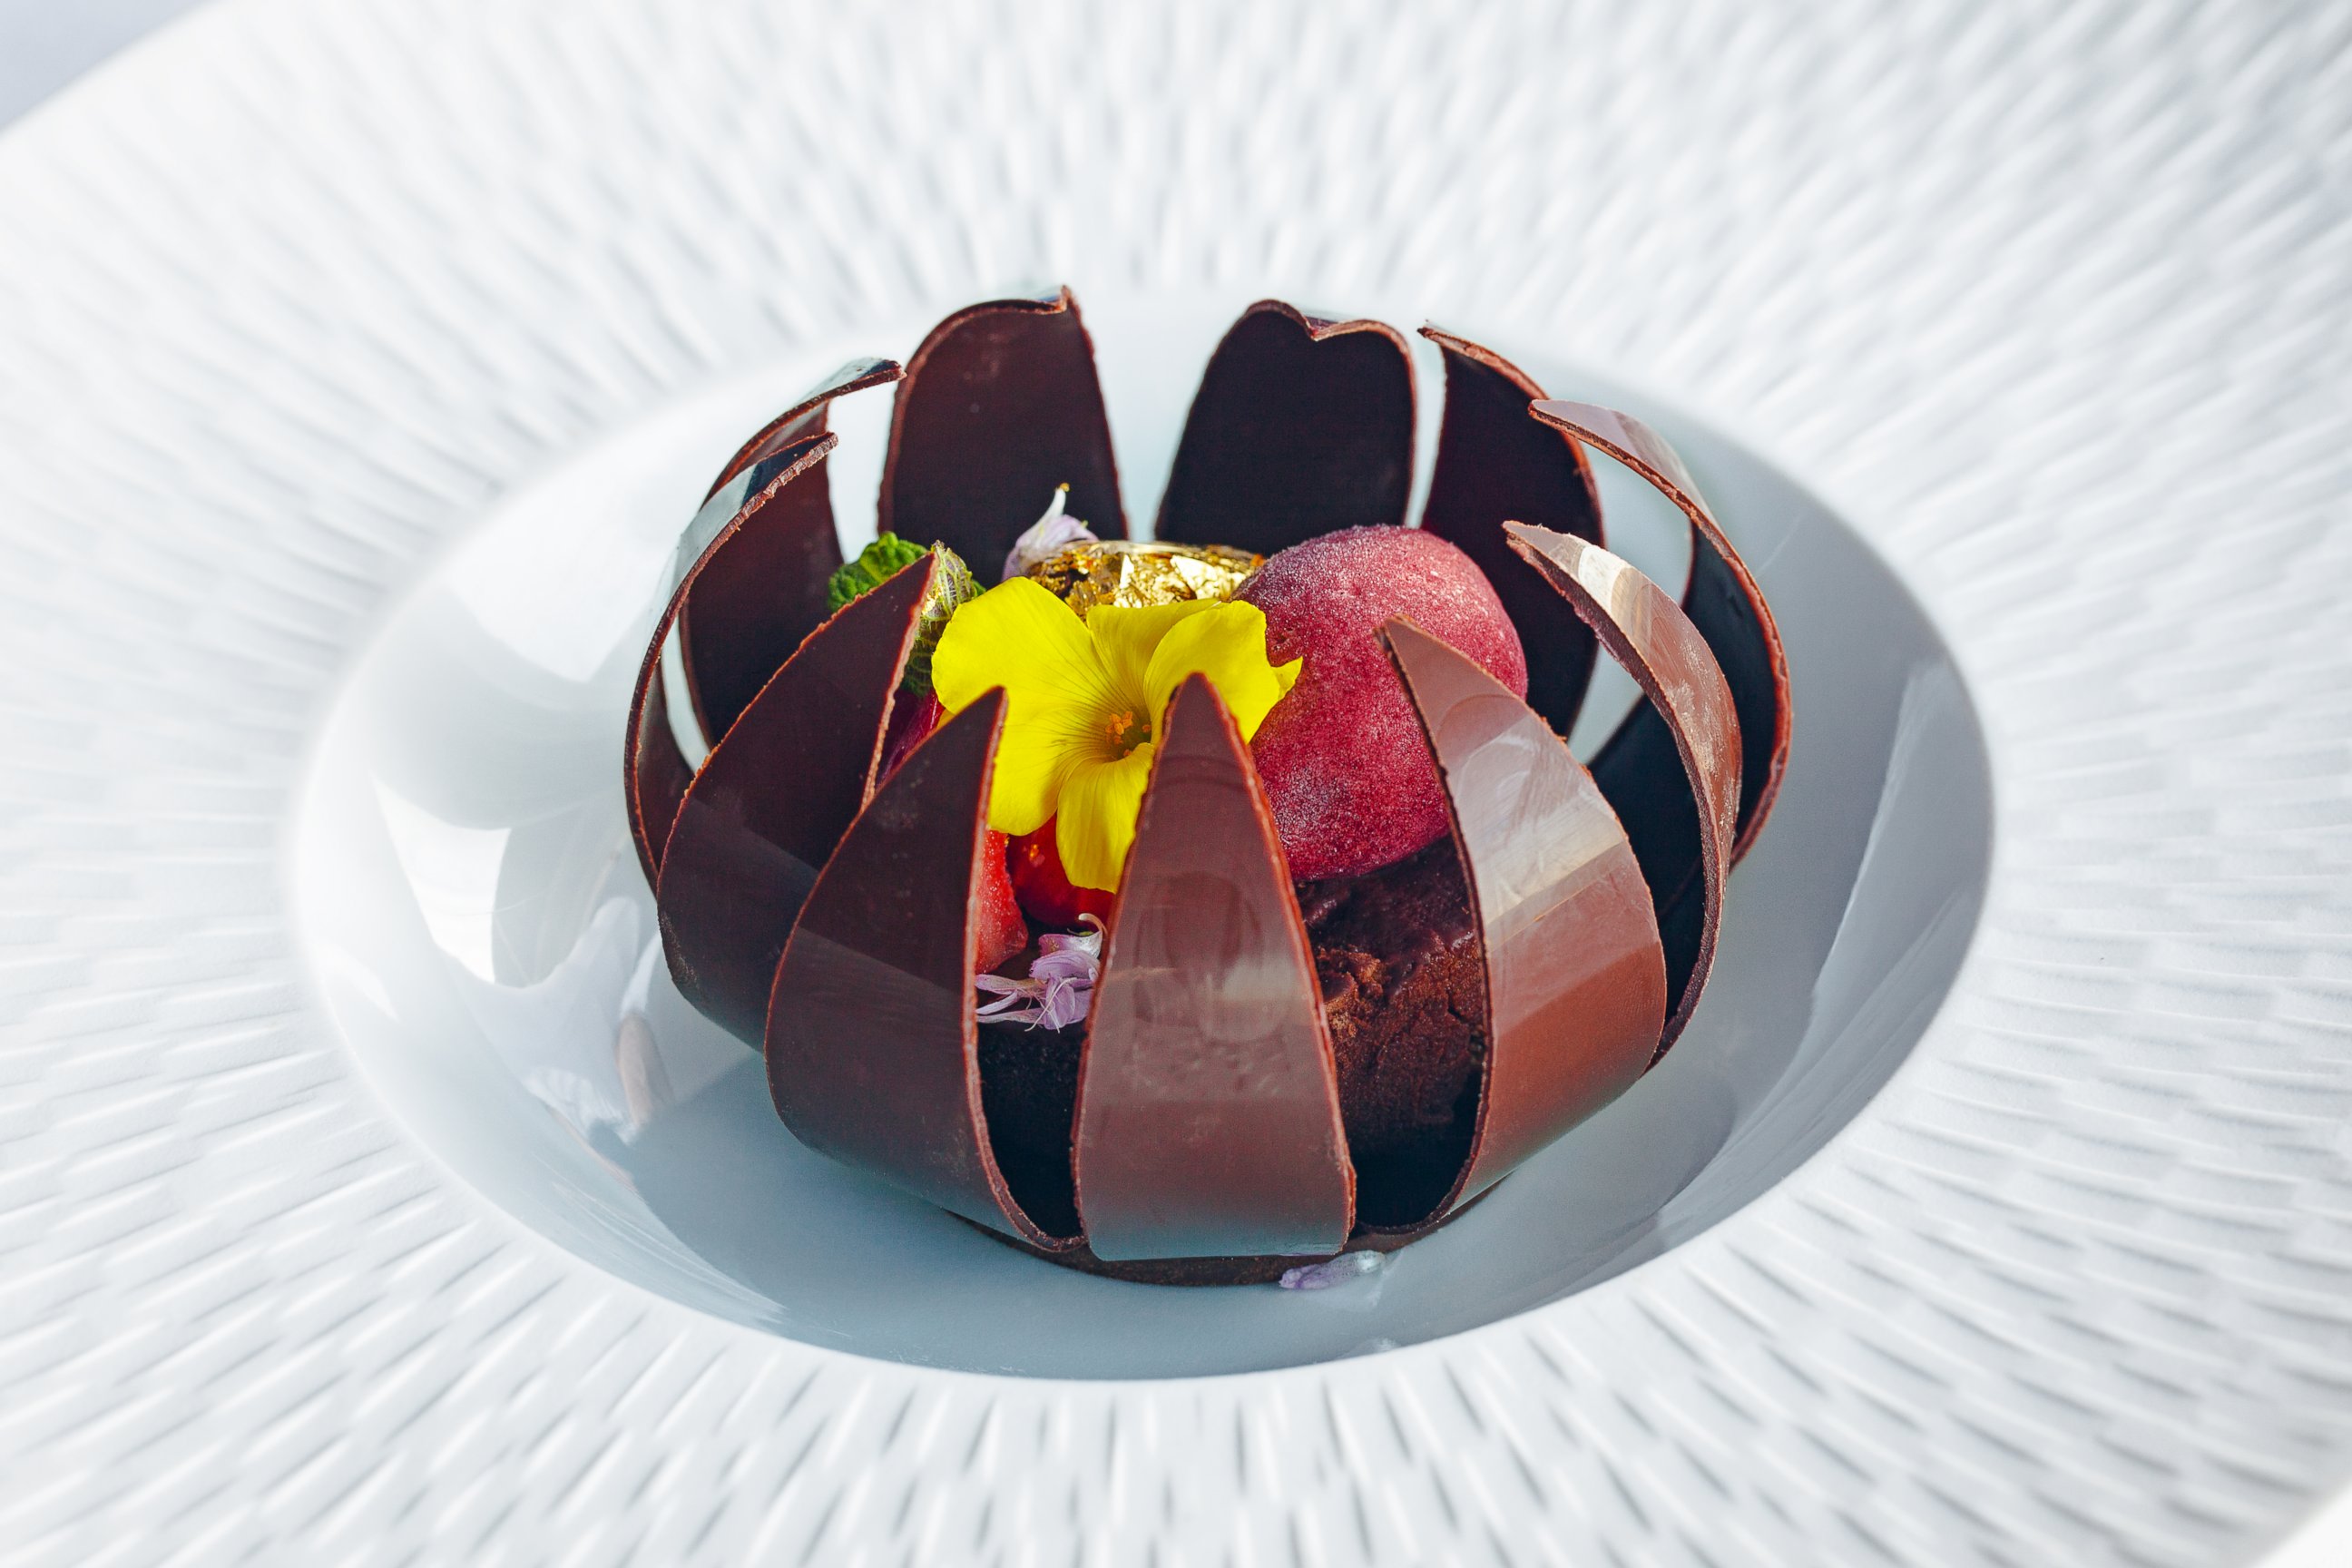 PHOTO: The chocolate flower dessert, closed.